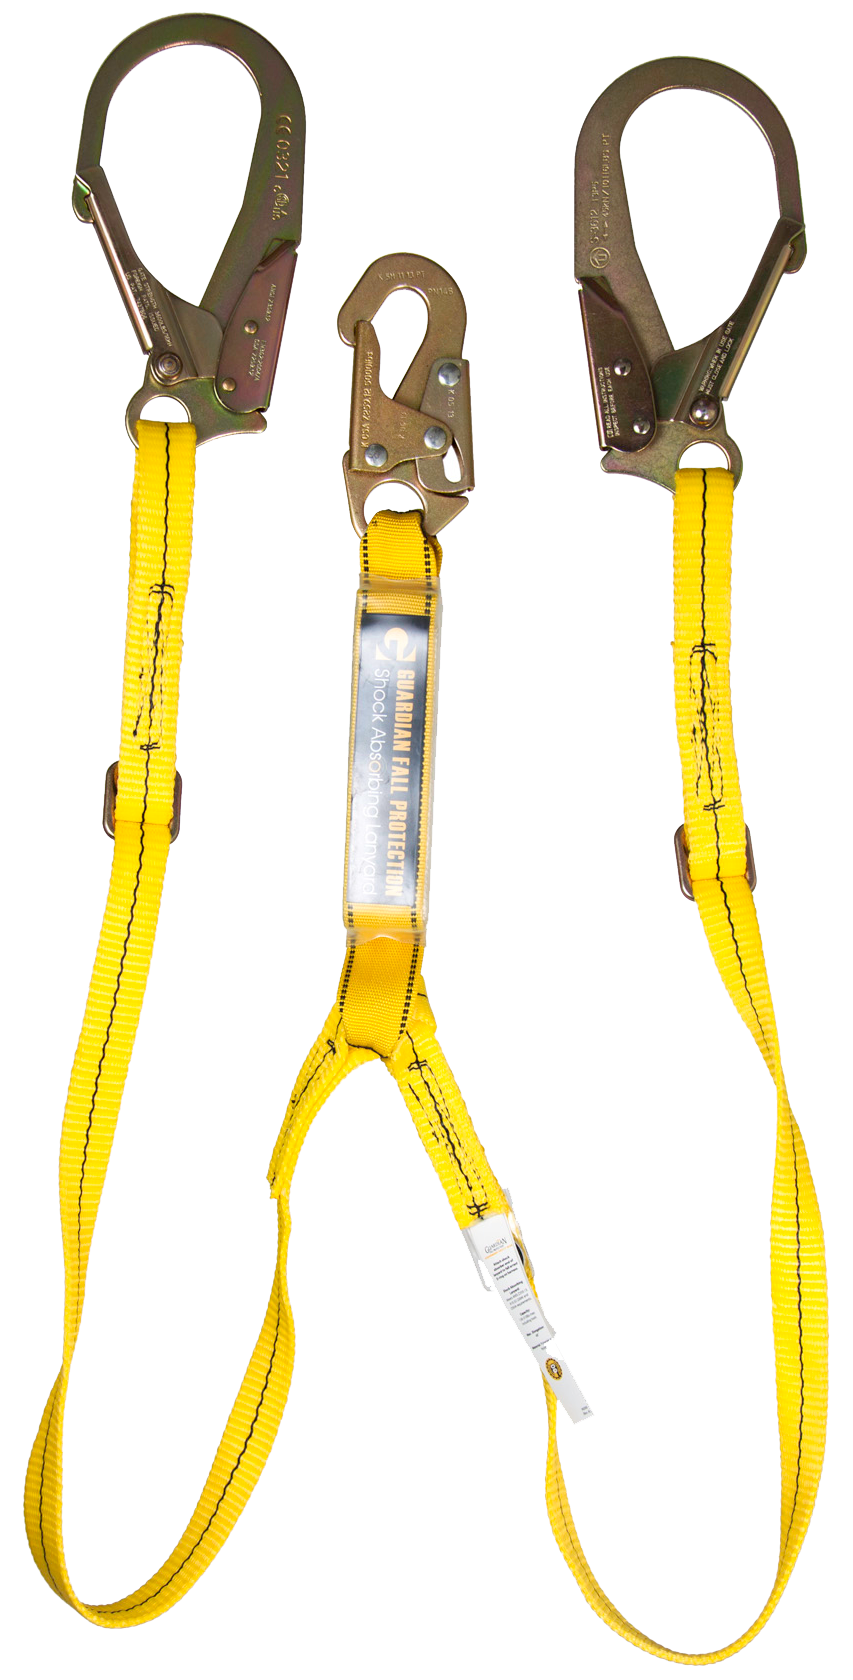 https://www.engineeredfallprotection.com/store/images/thumbs/0000137_guardian-shock-absorbing-adjustable-lanyard-4-6-ft-double-leg-w-rebar-hooks-20091.png